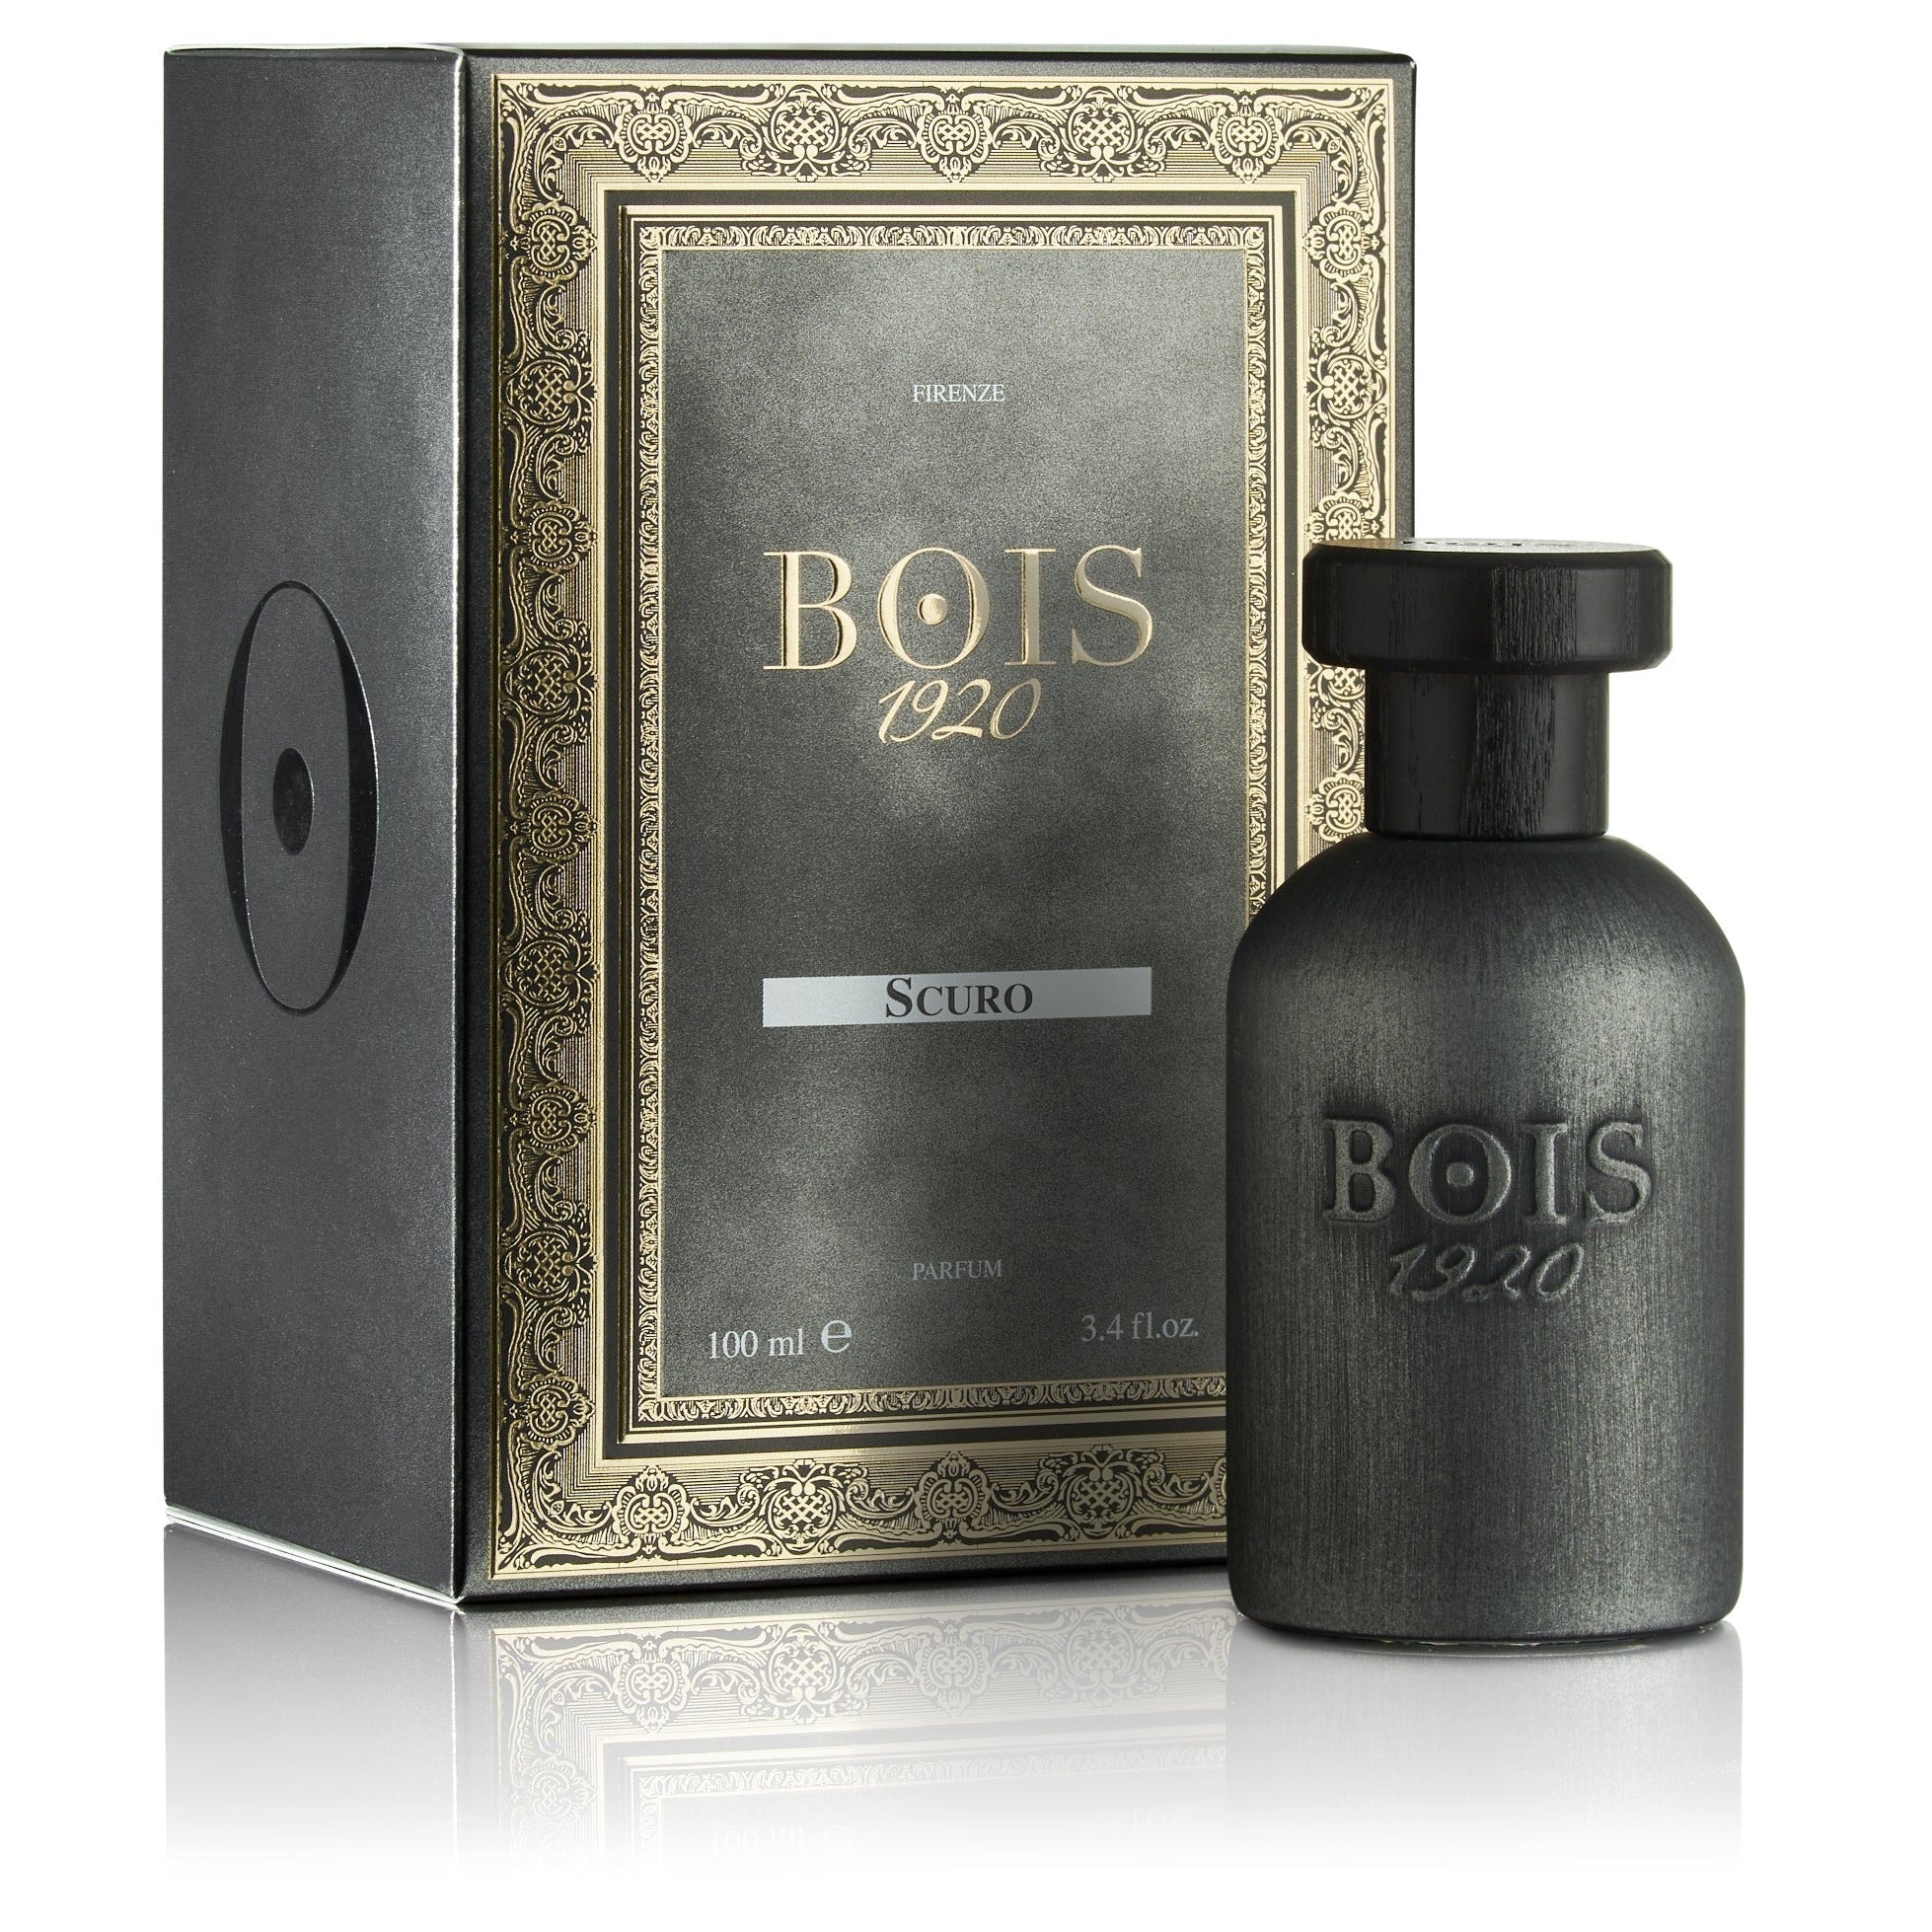 Bois 1920 Scuro Parfum | My Perfume Shop Australia